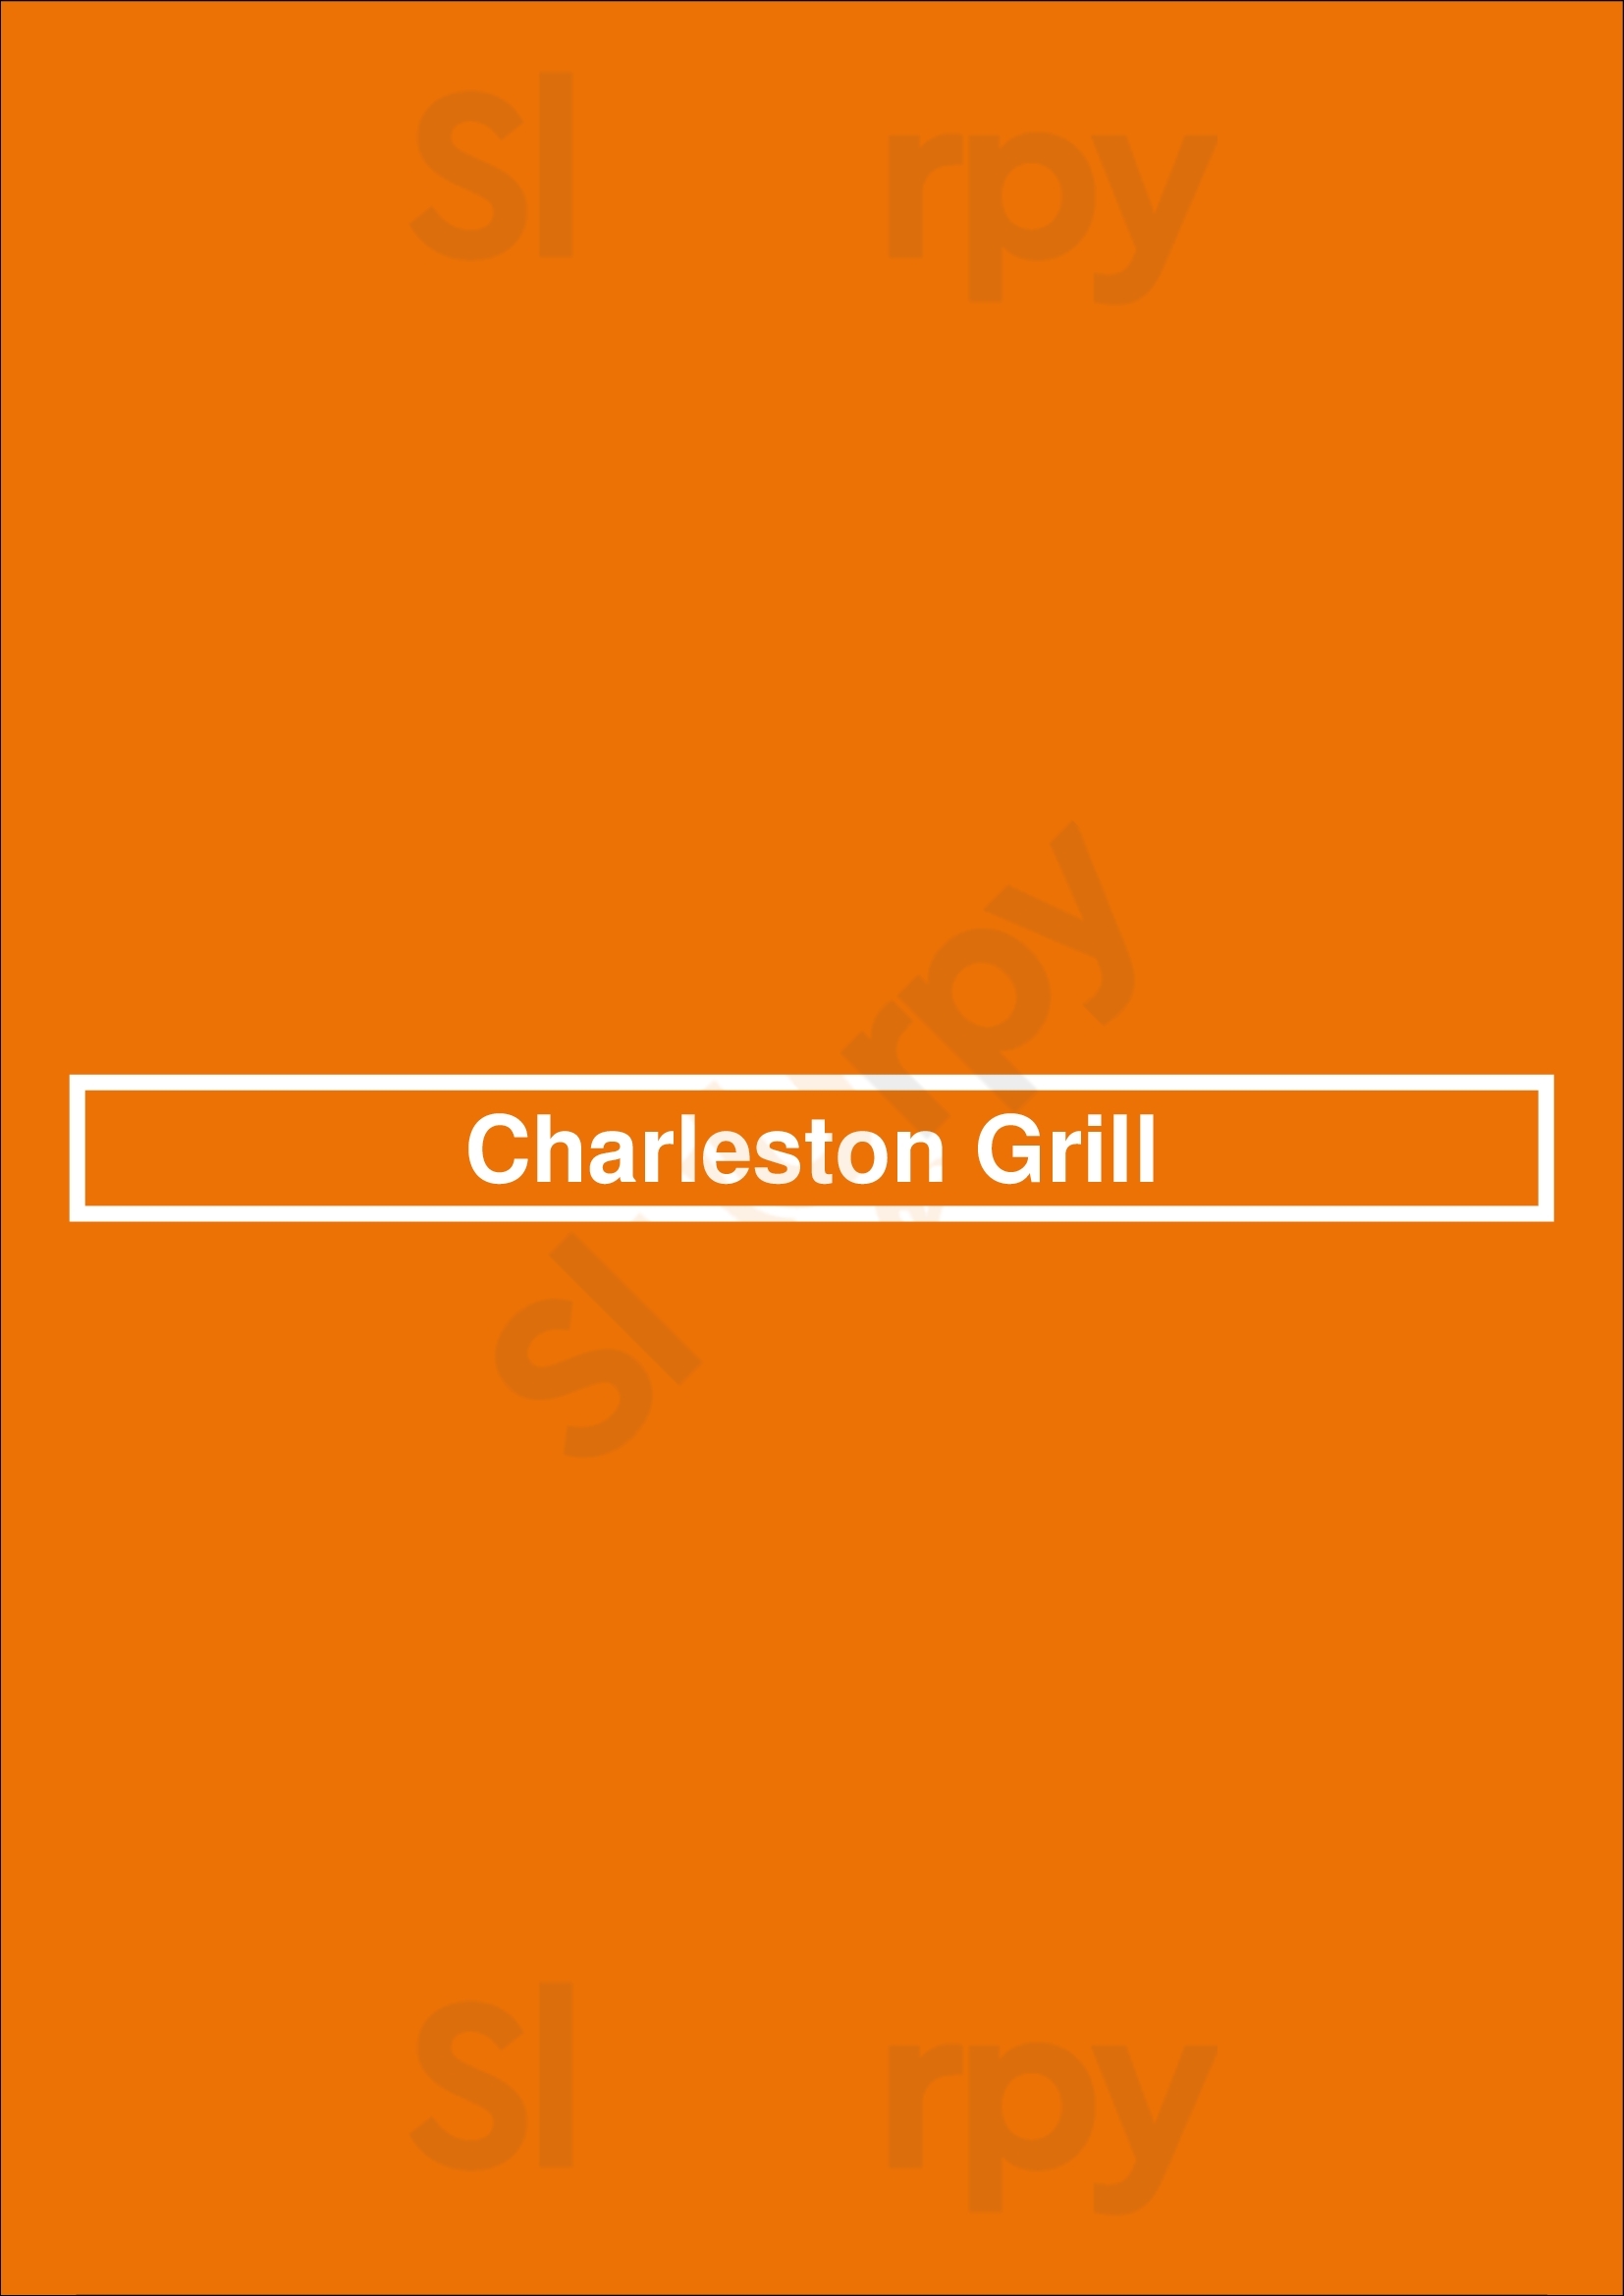 Charleston Grill Charleston Menu - 1